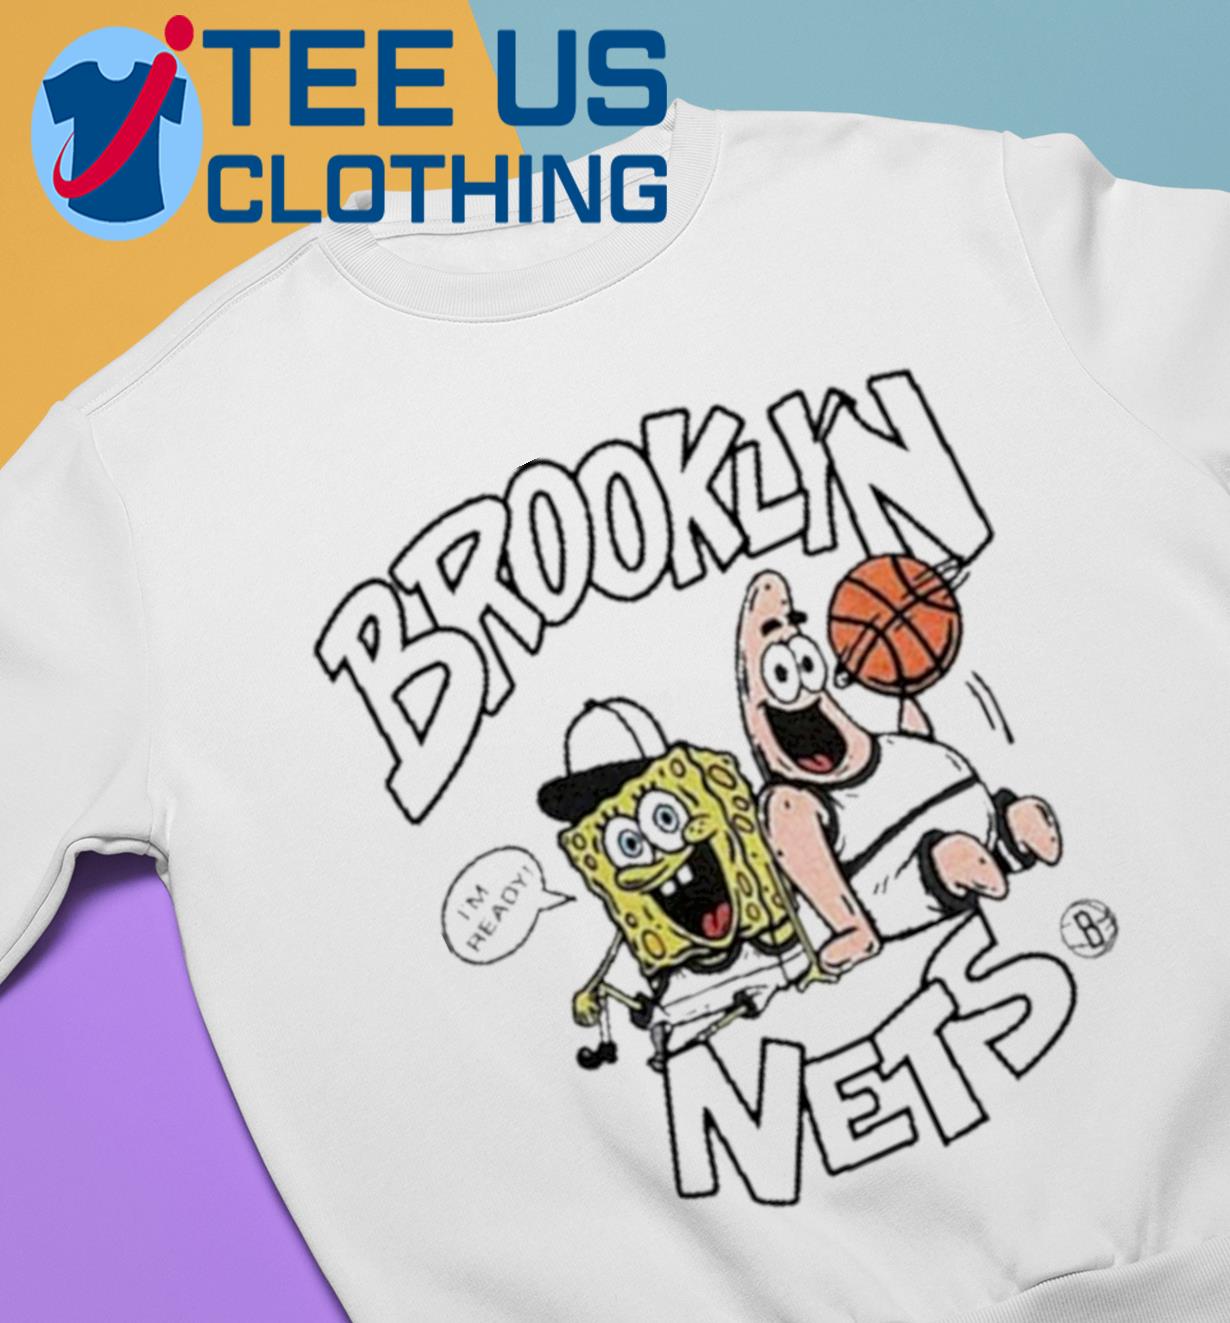 Brooklyn Nets Basketball Halloween Shirt, hoodie, longsleeve, sweater